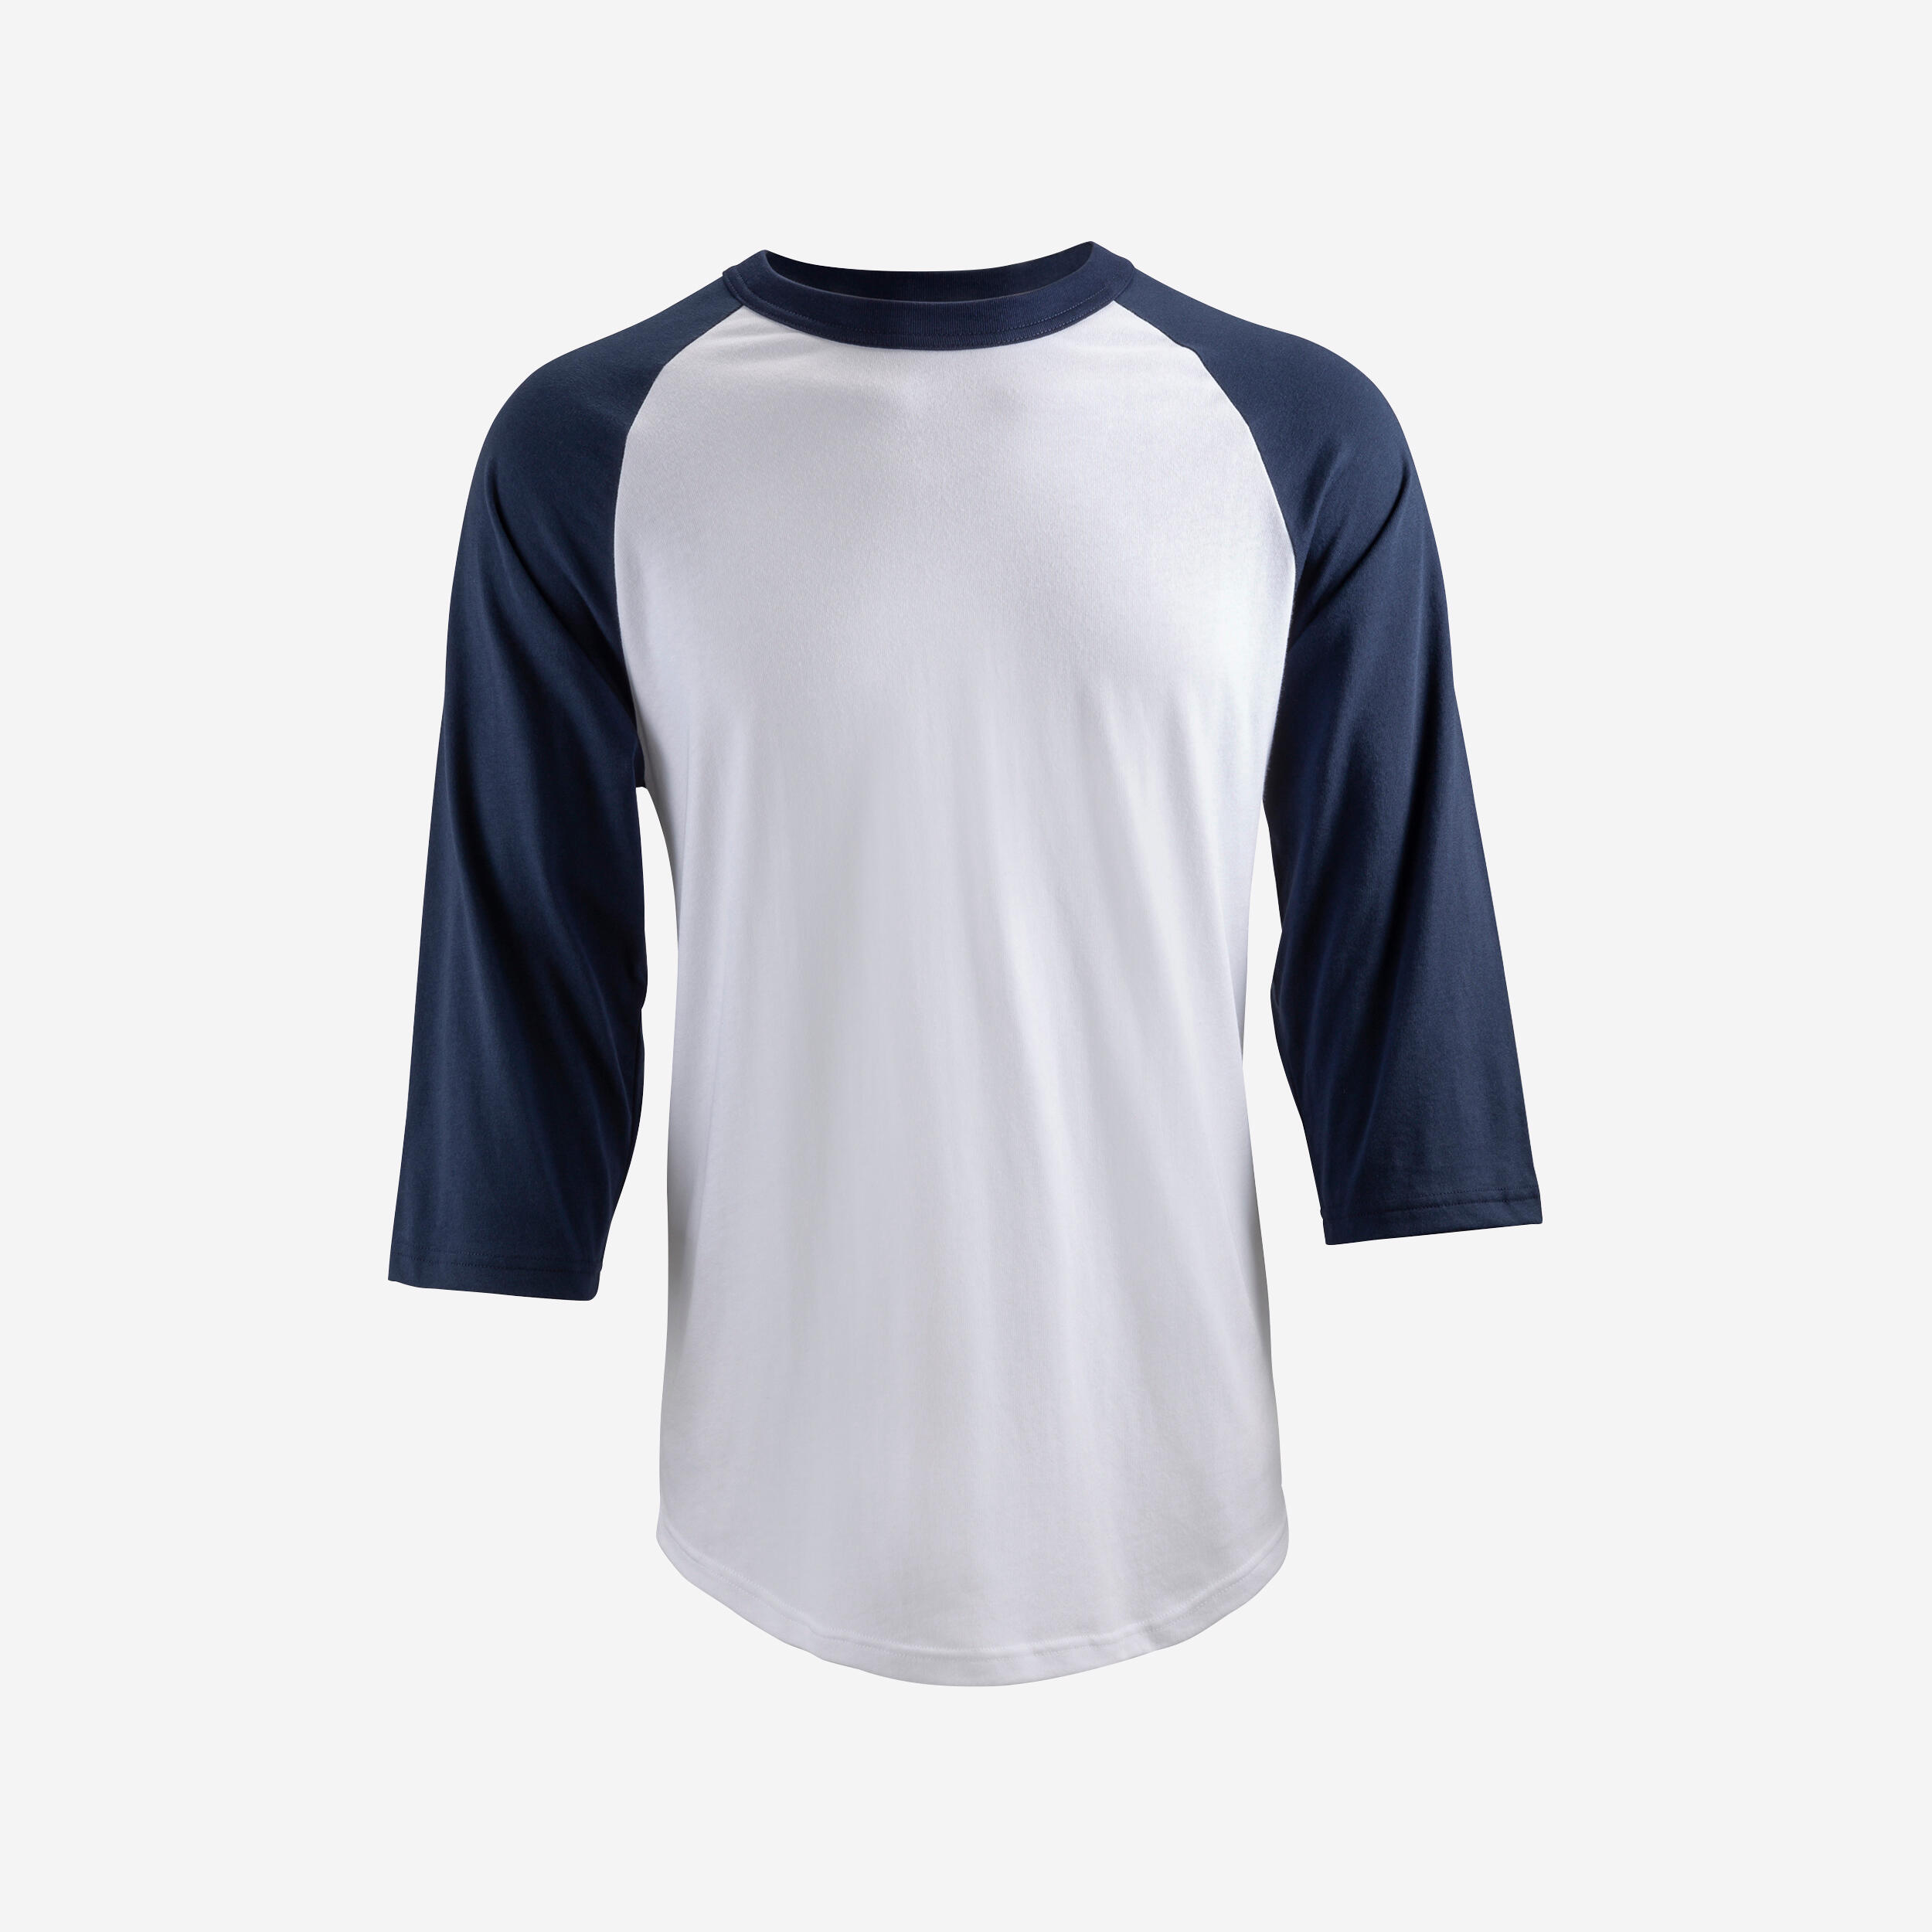 Camisas y Camisetas Béisbol y Softball | Decathlon